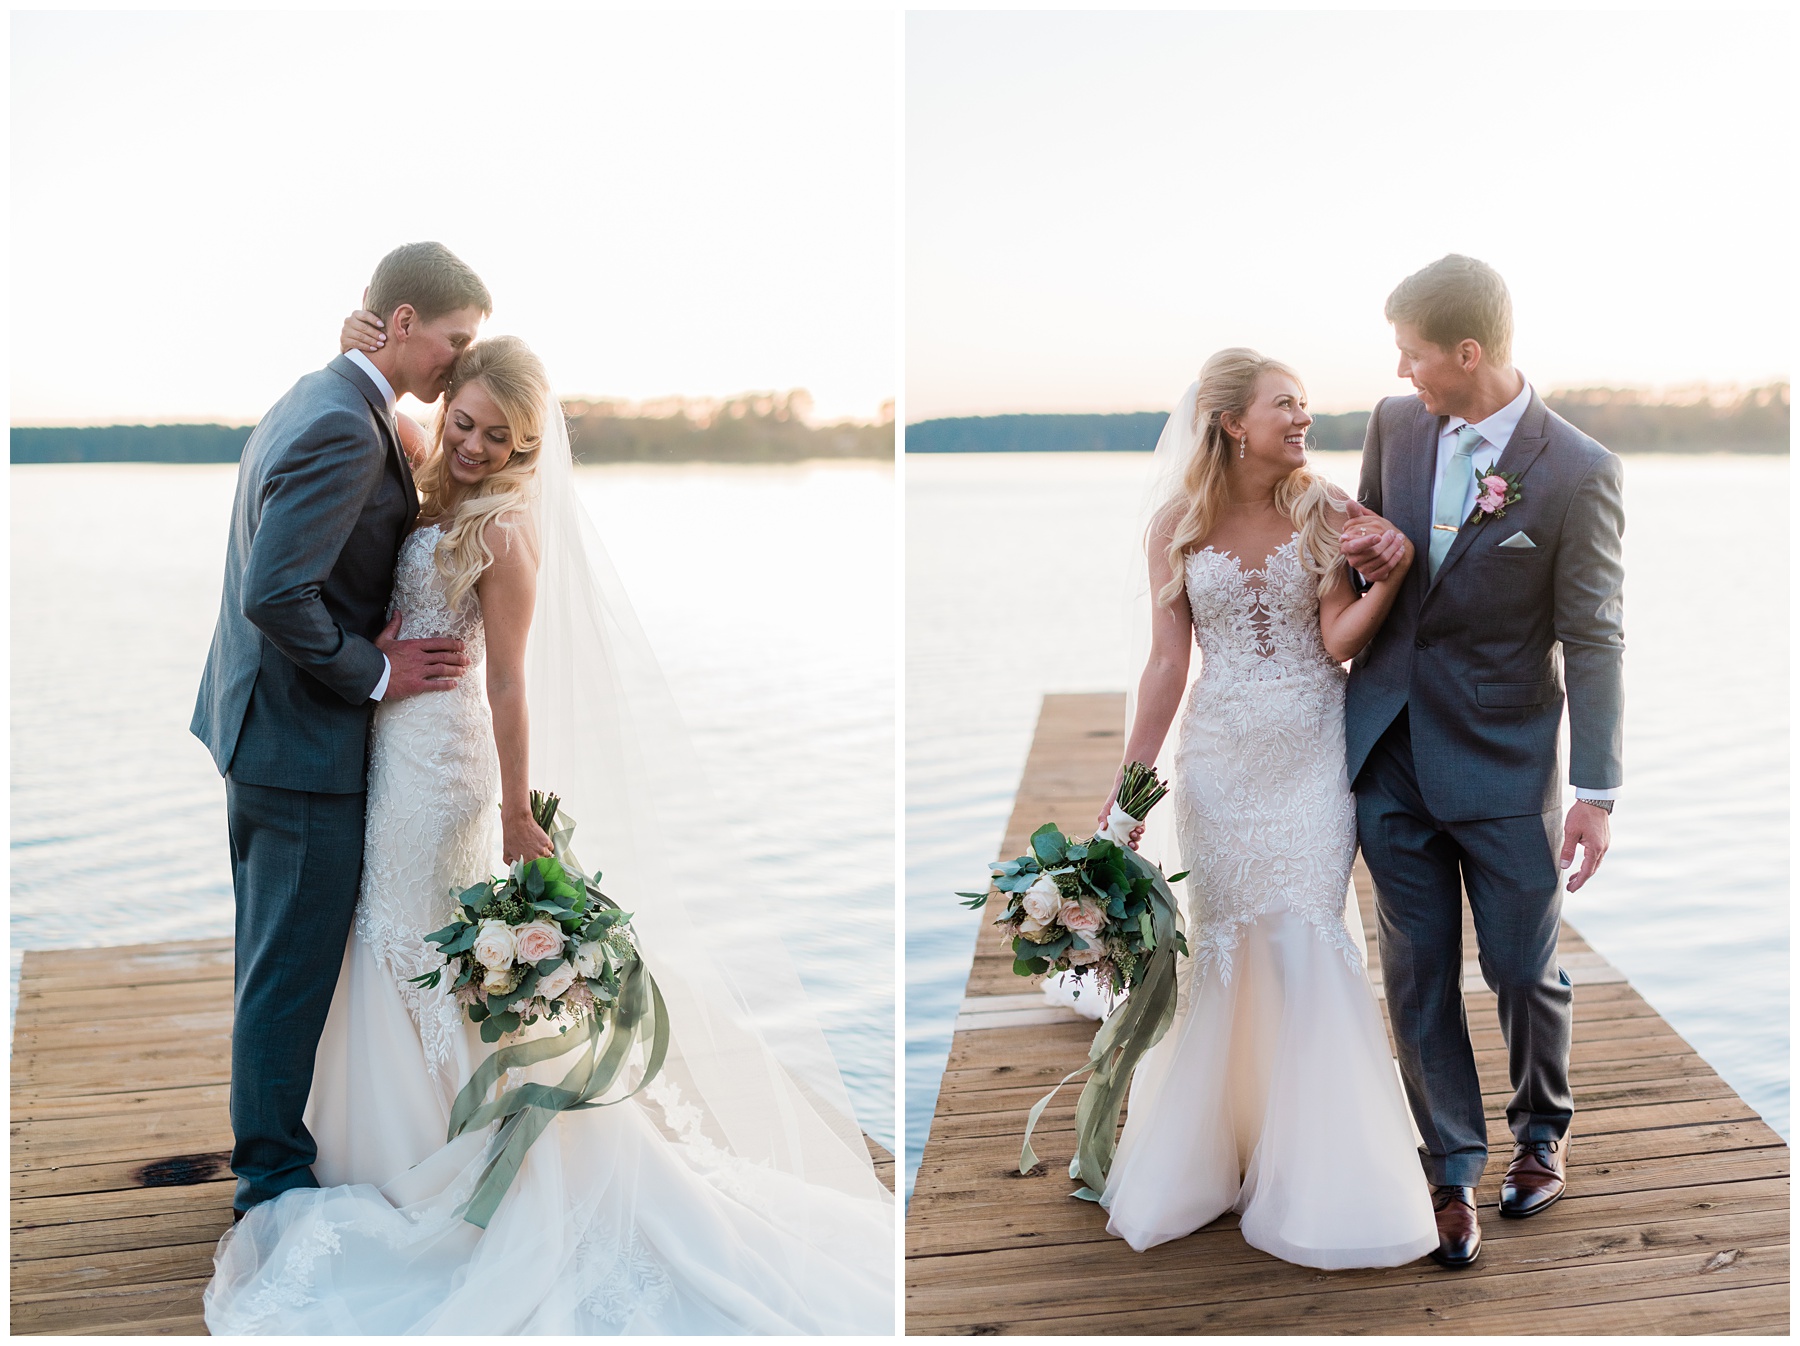 Couple Portrait | Lake Tyler Petroleum Club in Tyler TX by East Texas wedding photographer Karina Danielle 